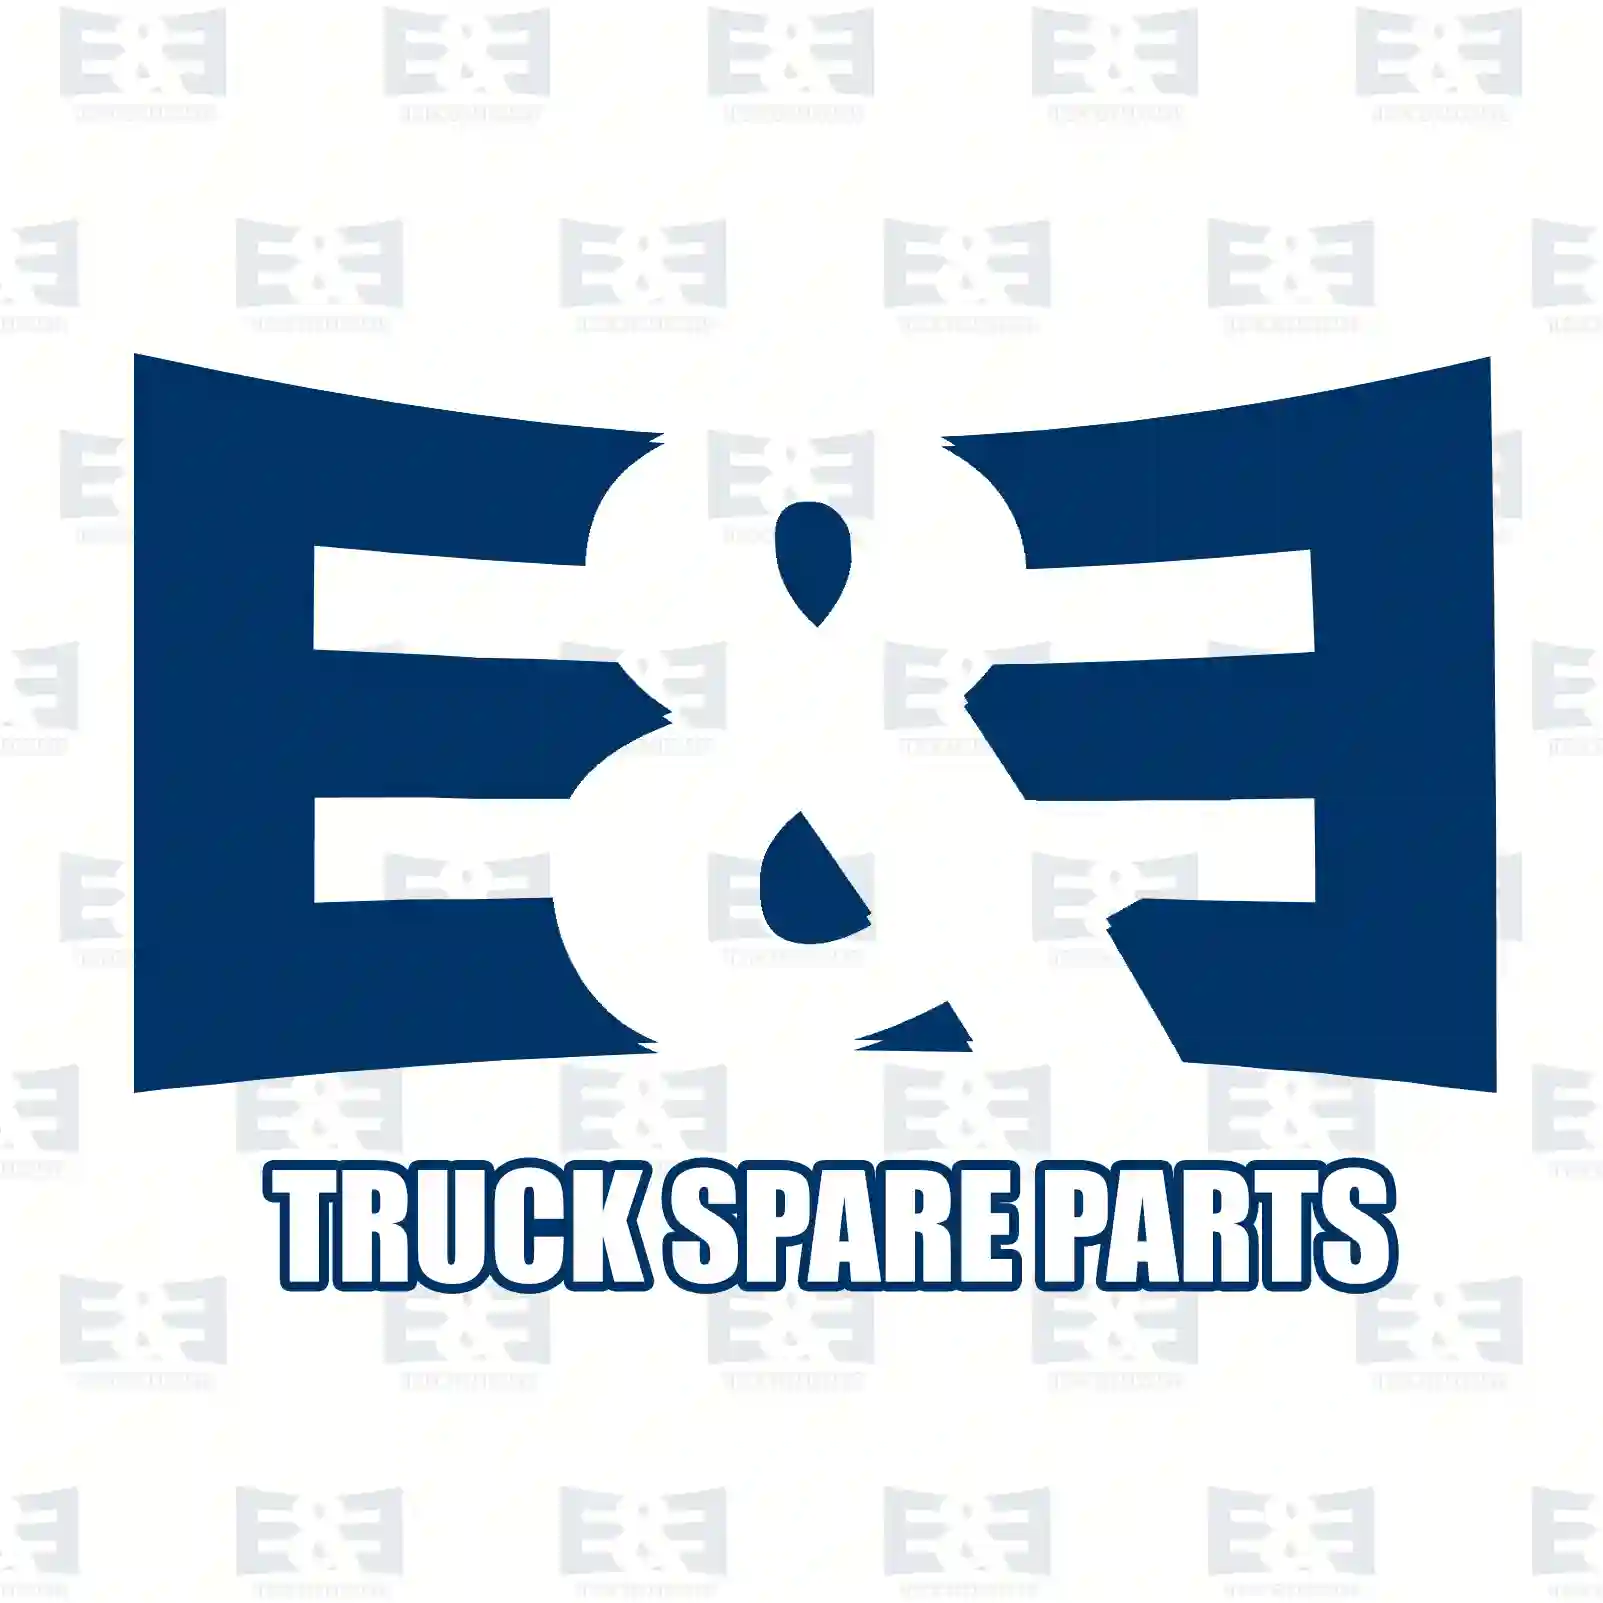  Fog lamp, right || E&E Truck Spare Parts | Truck Spare Parts, Auotomotive Spare Parts